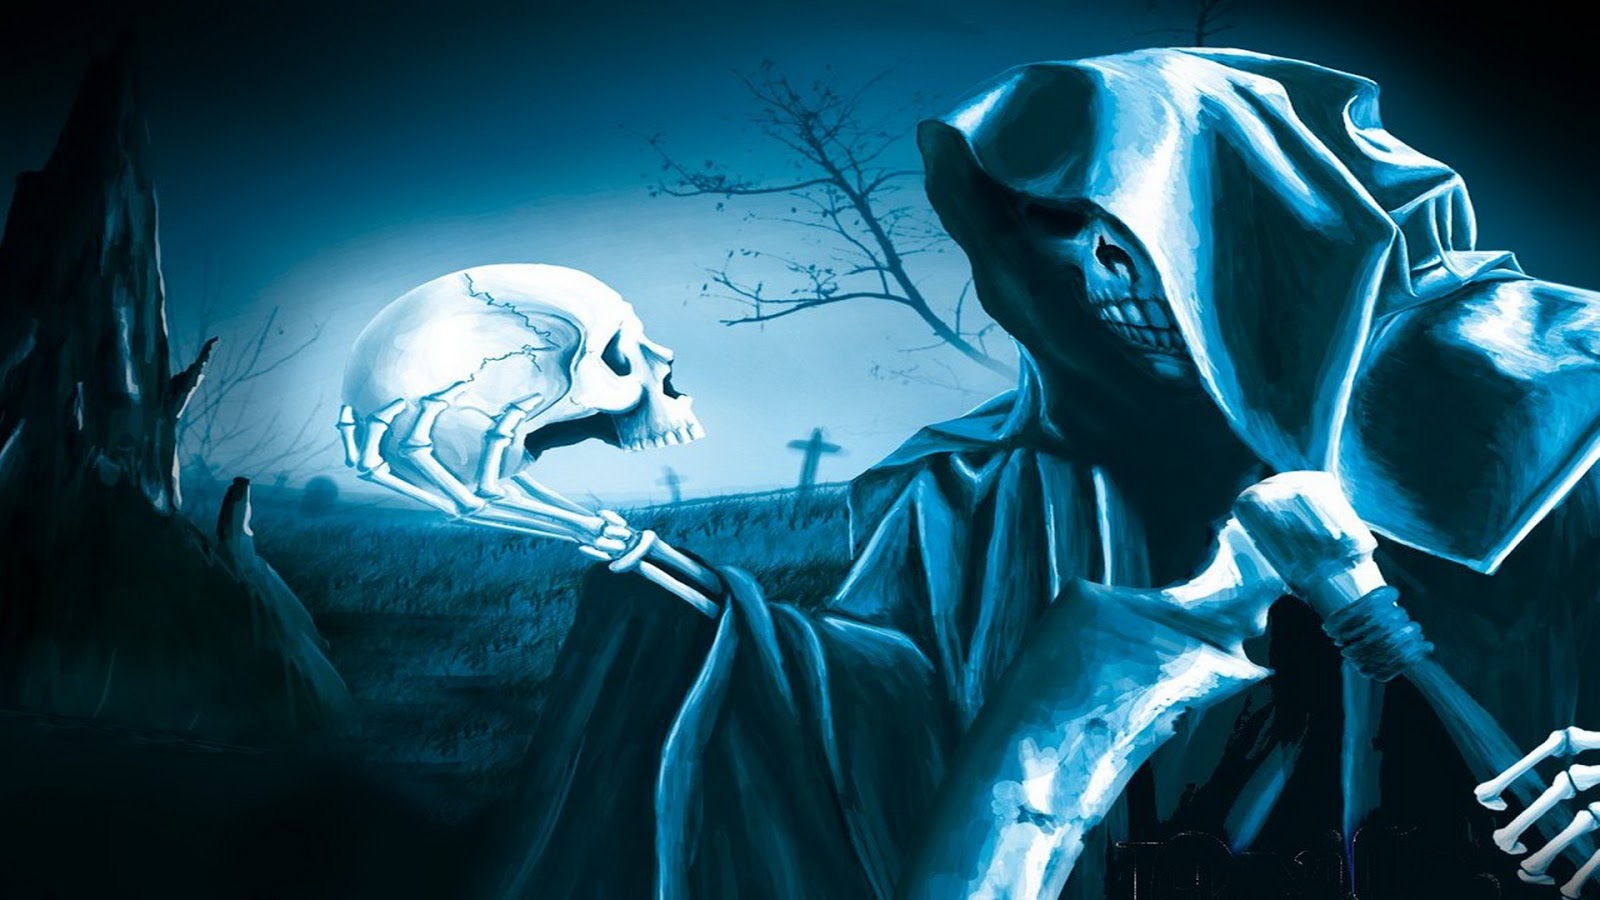 danger skull wallpapers free download,illustration,human,organism,fictional character,darkness